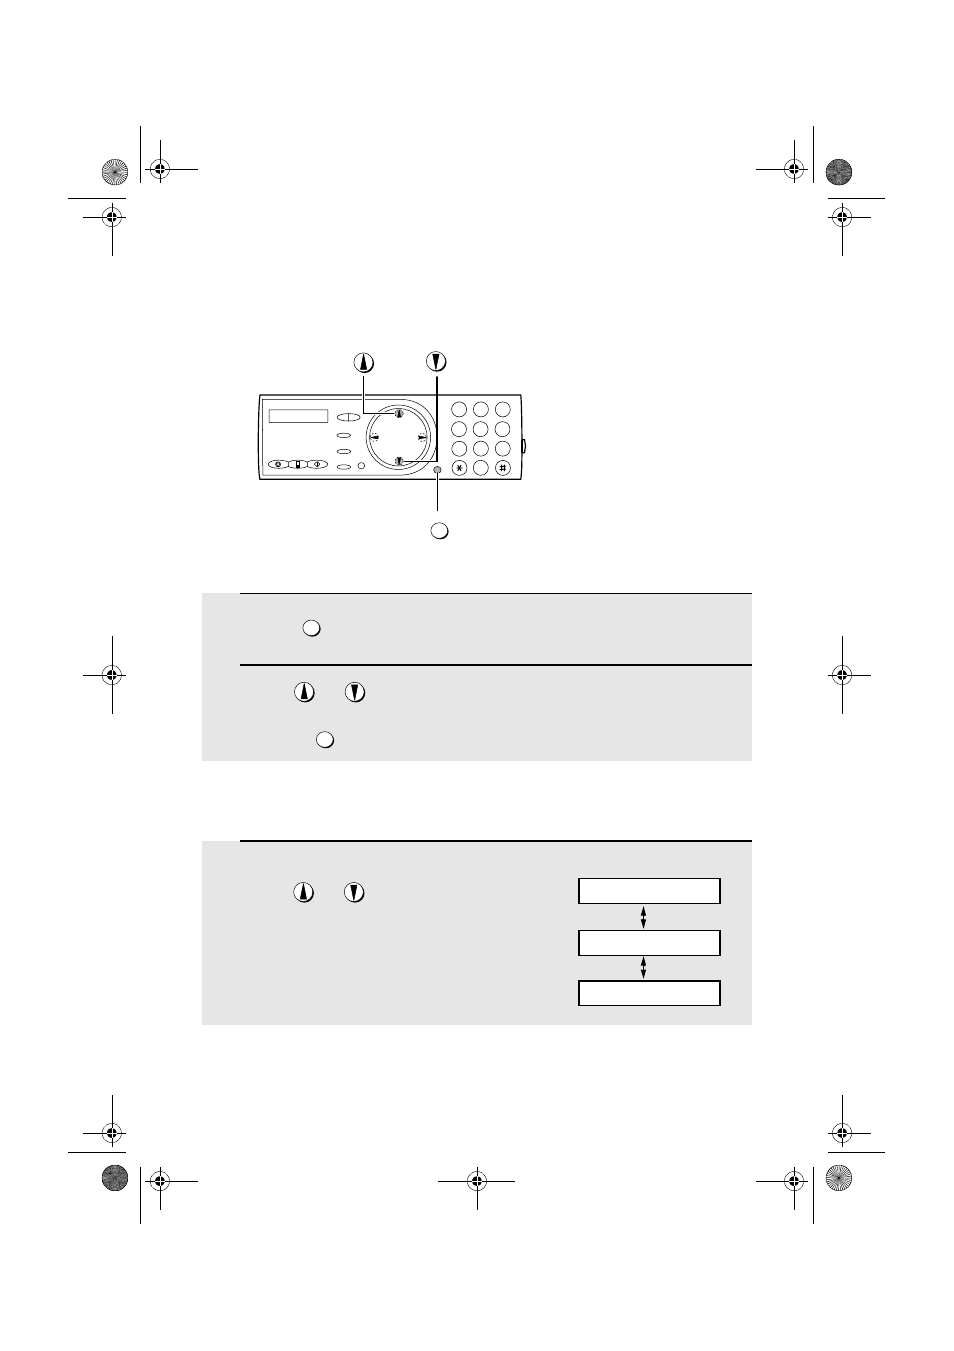 Volume adjustment - fax machine, Speaker, Fax machine handset | GE UX-CL 220 User Manual | Page 32 / 143